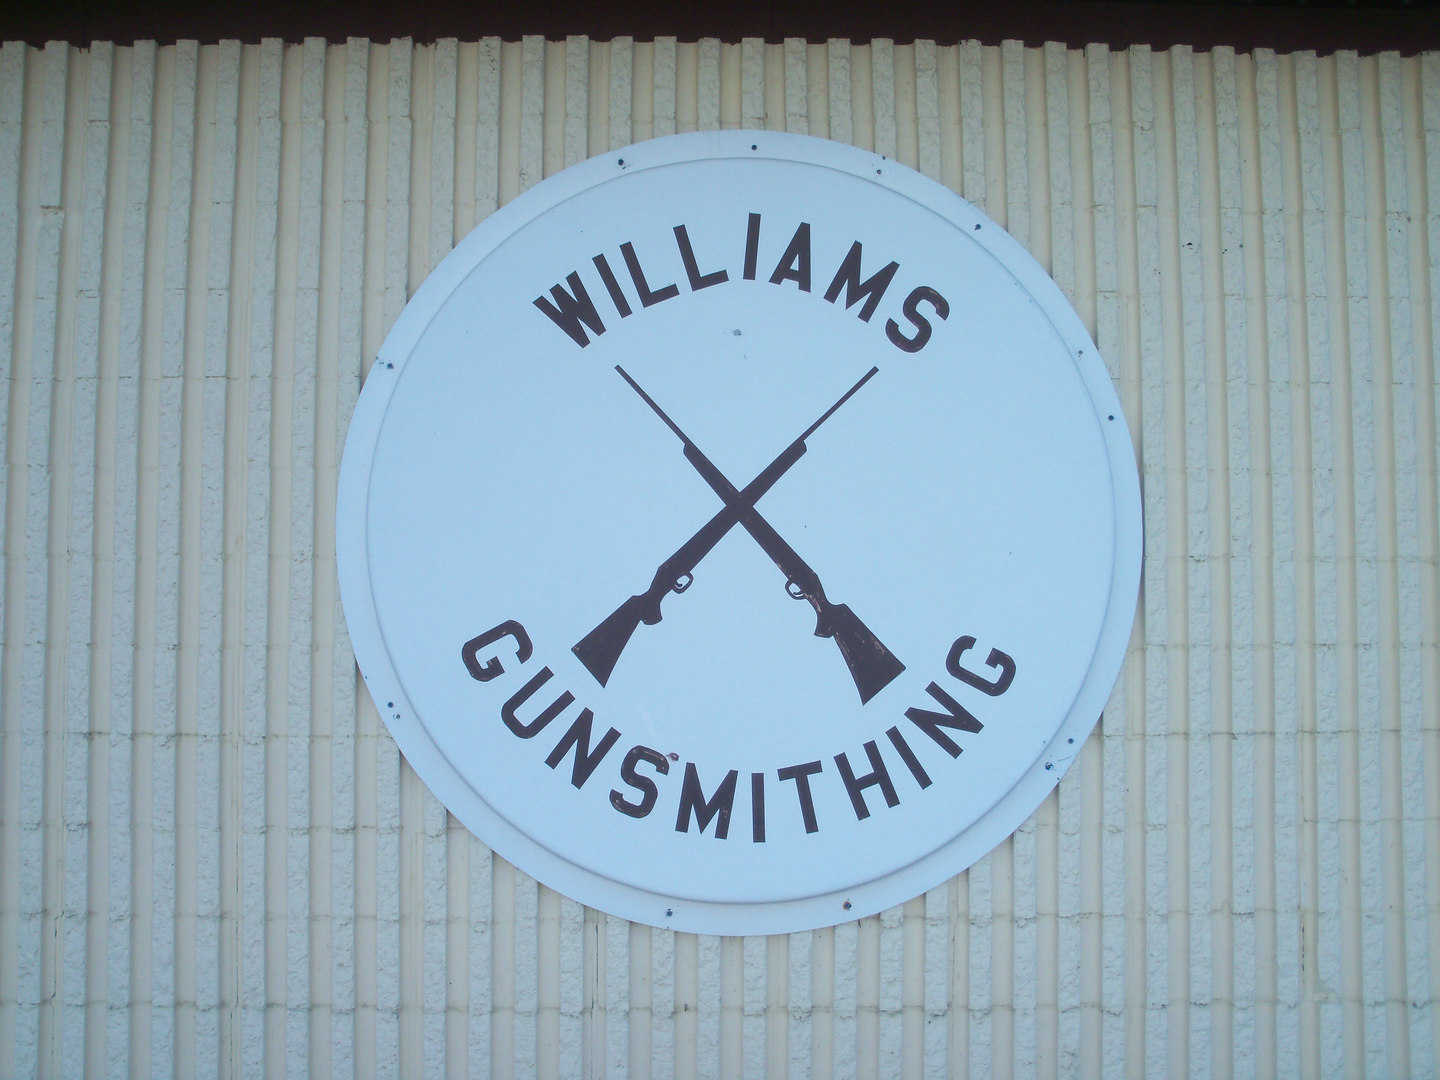 Dick Williams Gun Shop Inc